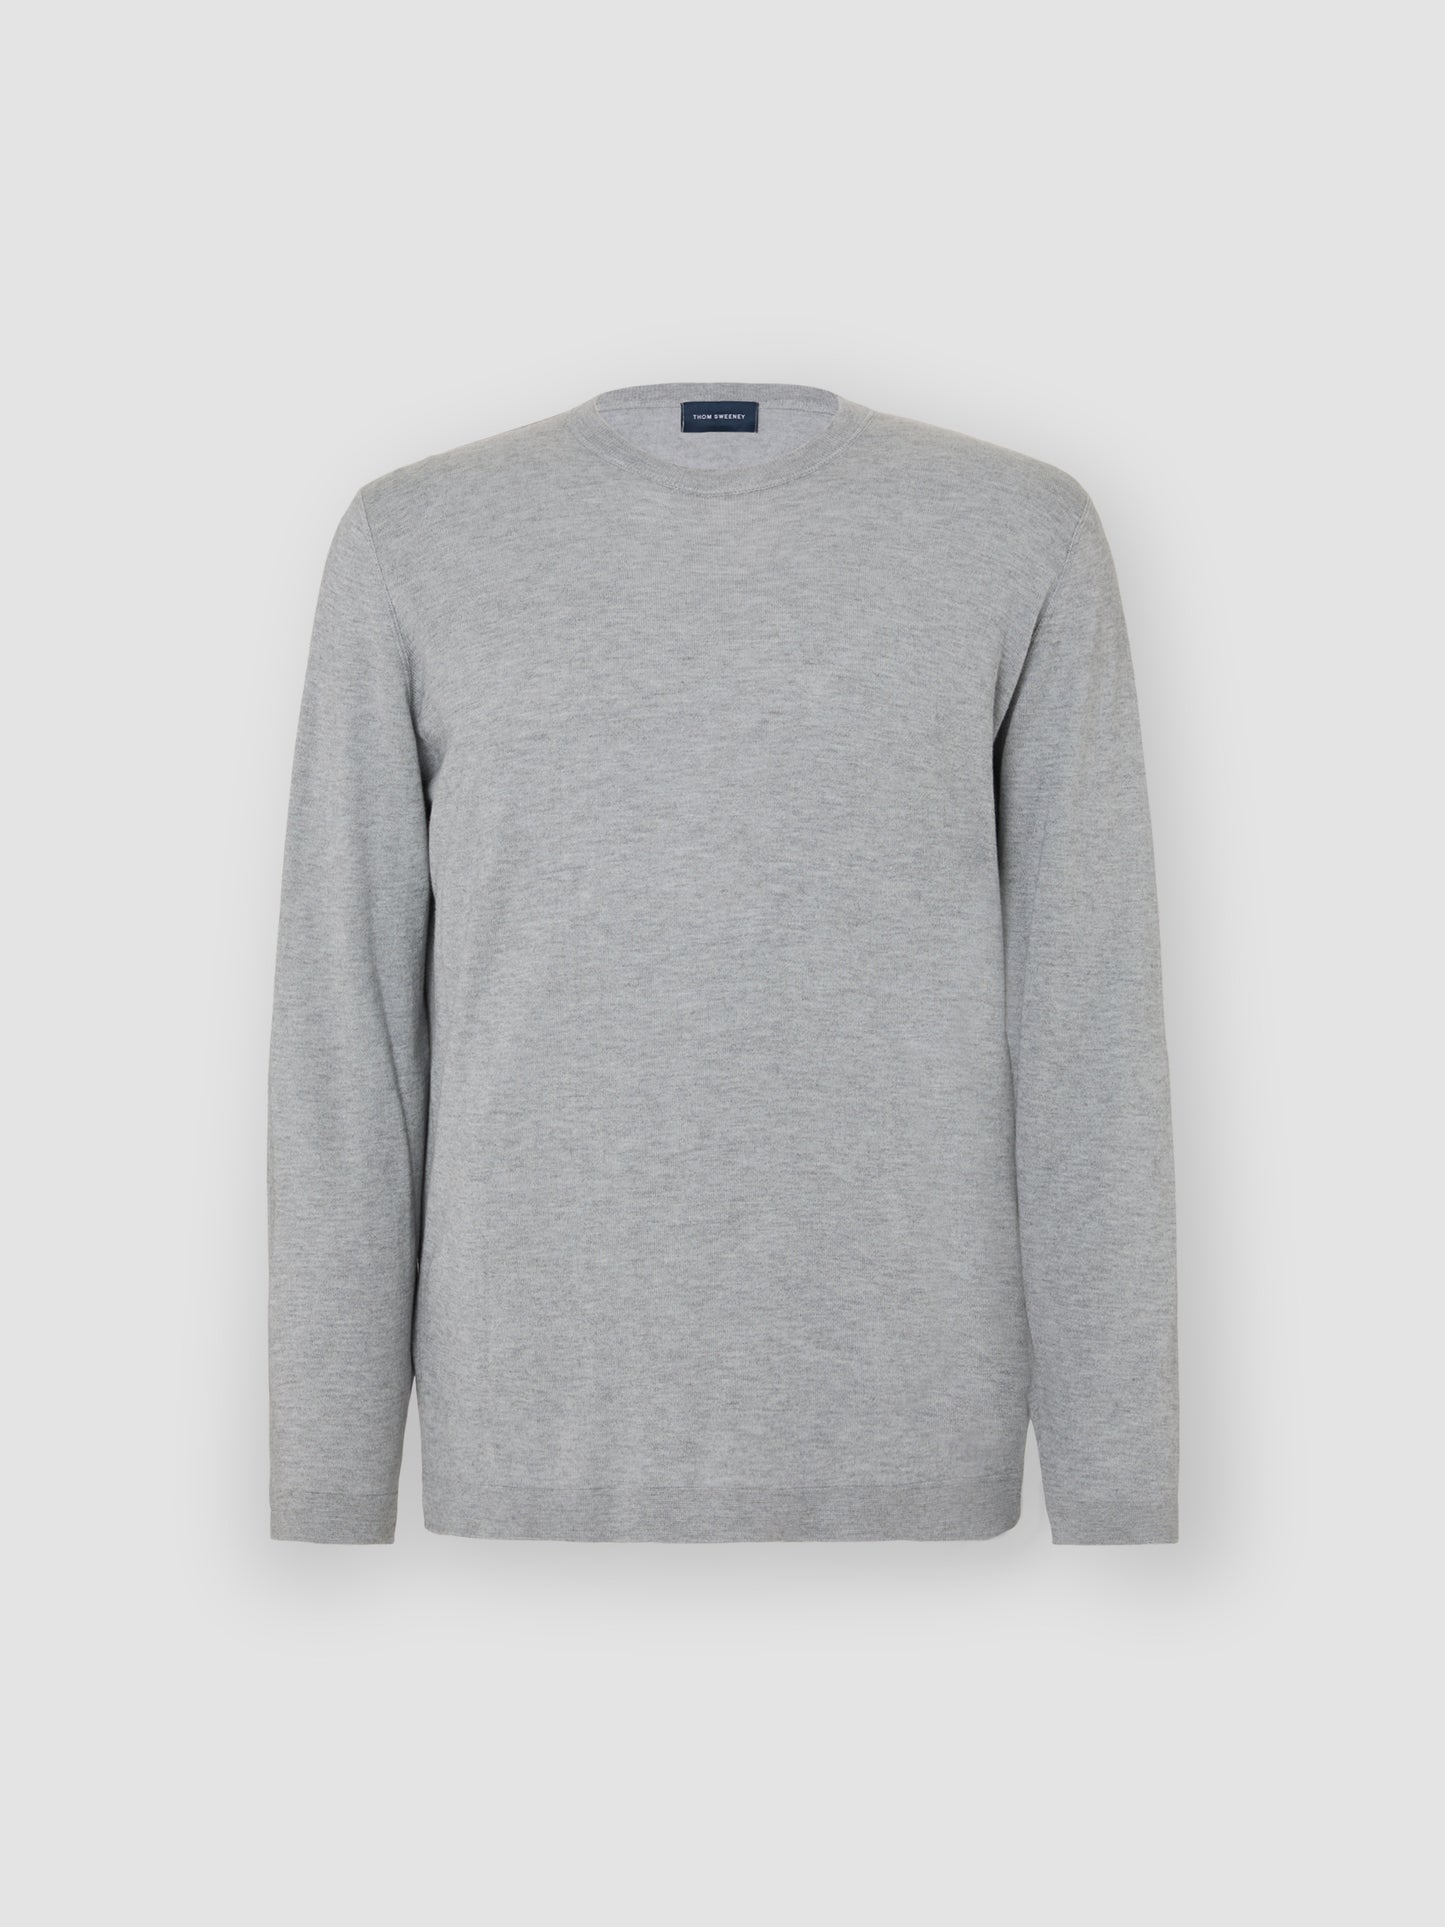 Fine Gauge Cotton Sweater Grey Product image